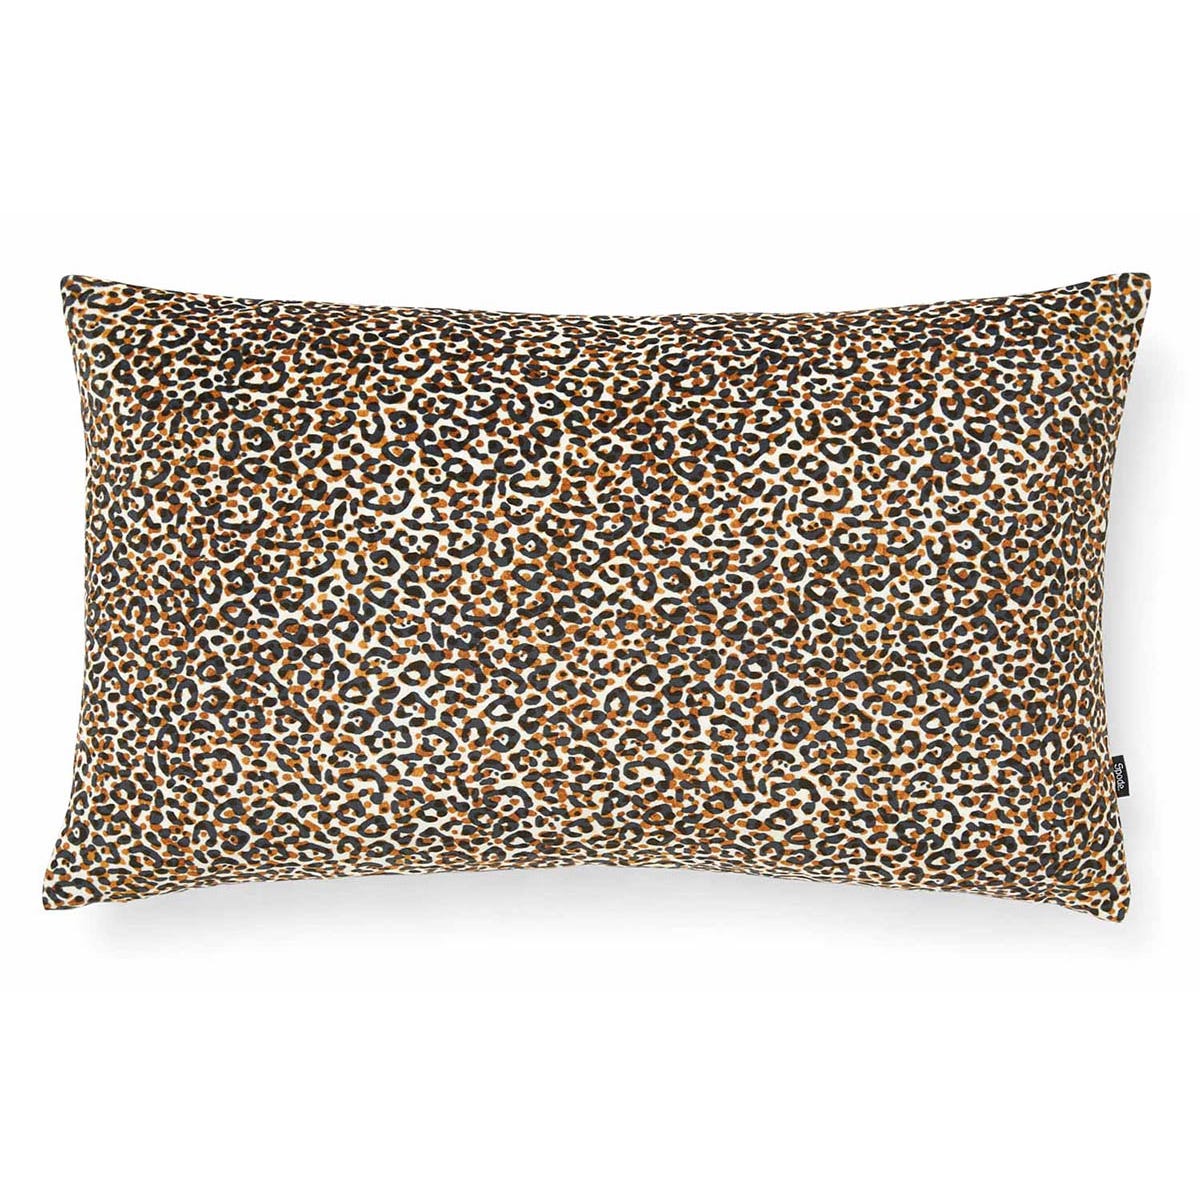 Creatures of Curiosity Leopard Print Cushion